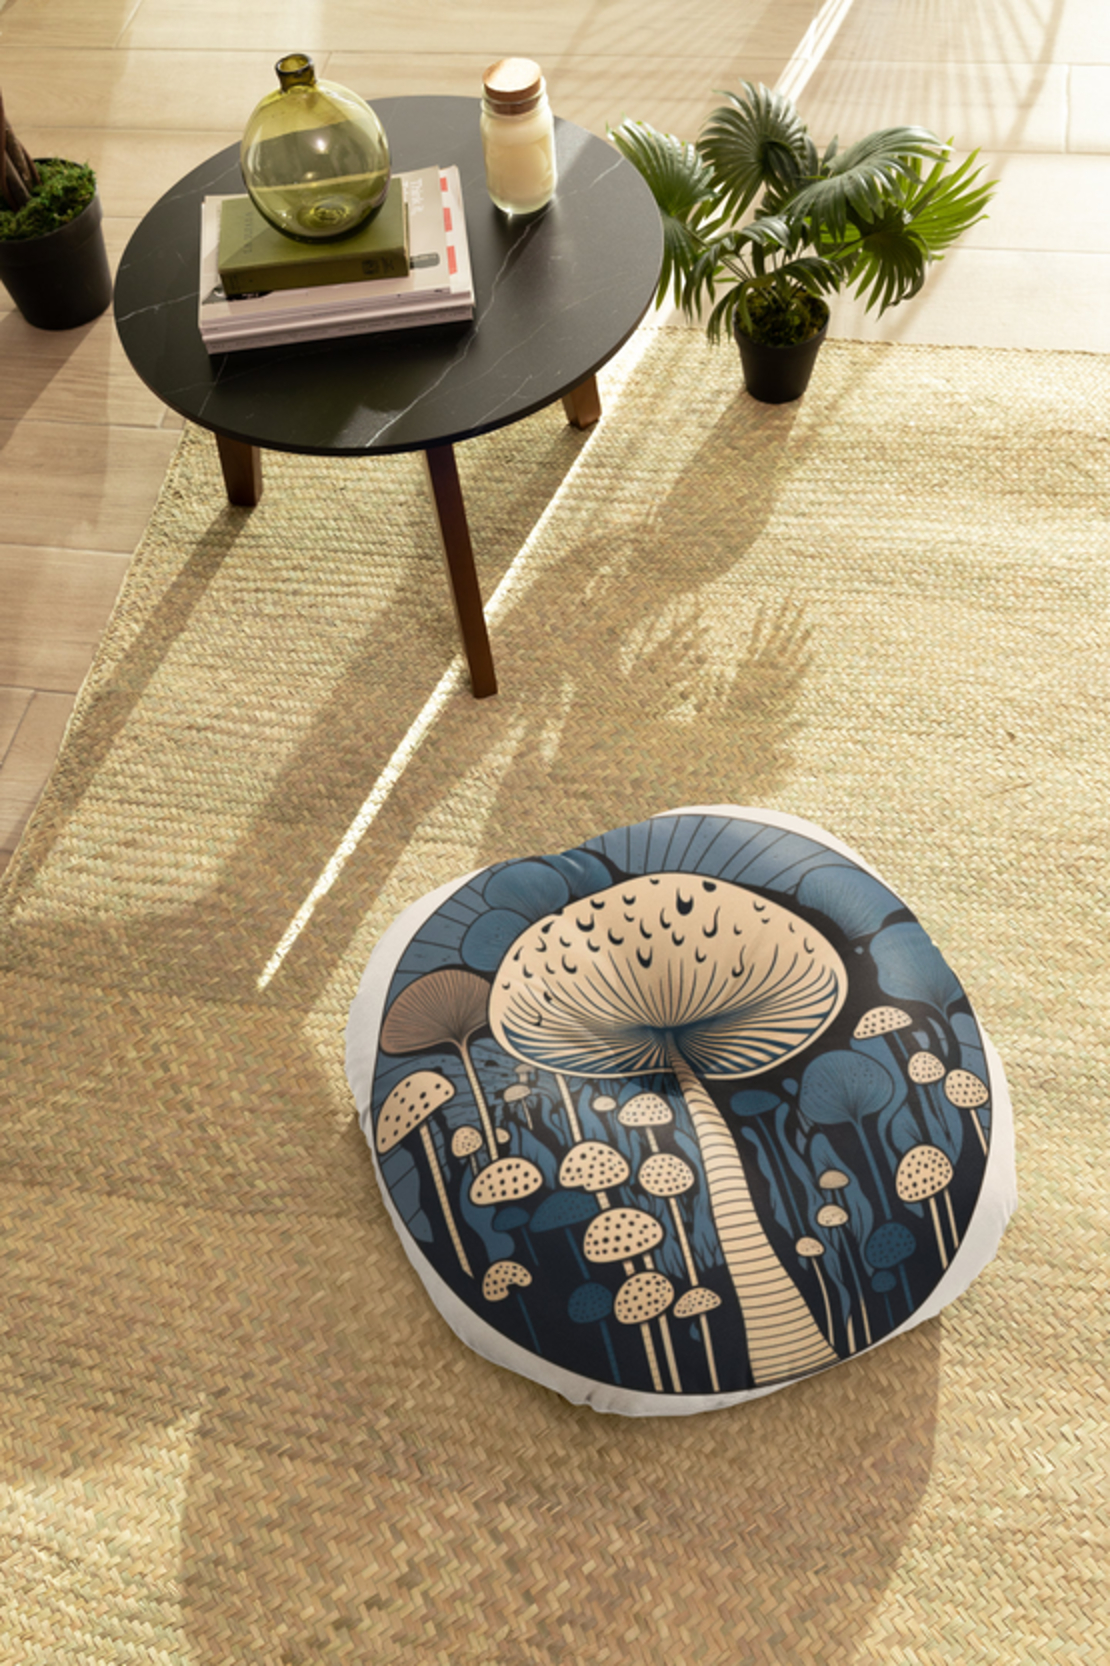 Floor Pillow Mystical Mushroom Illustration | Large Cushion for Cozy Floor Seating, Reading Nooks, Home Decor